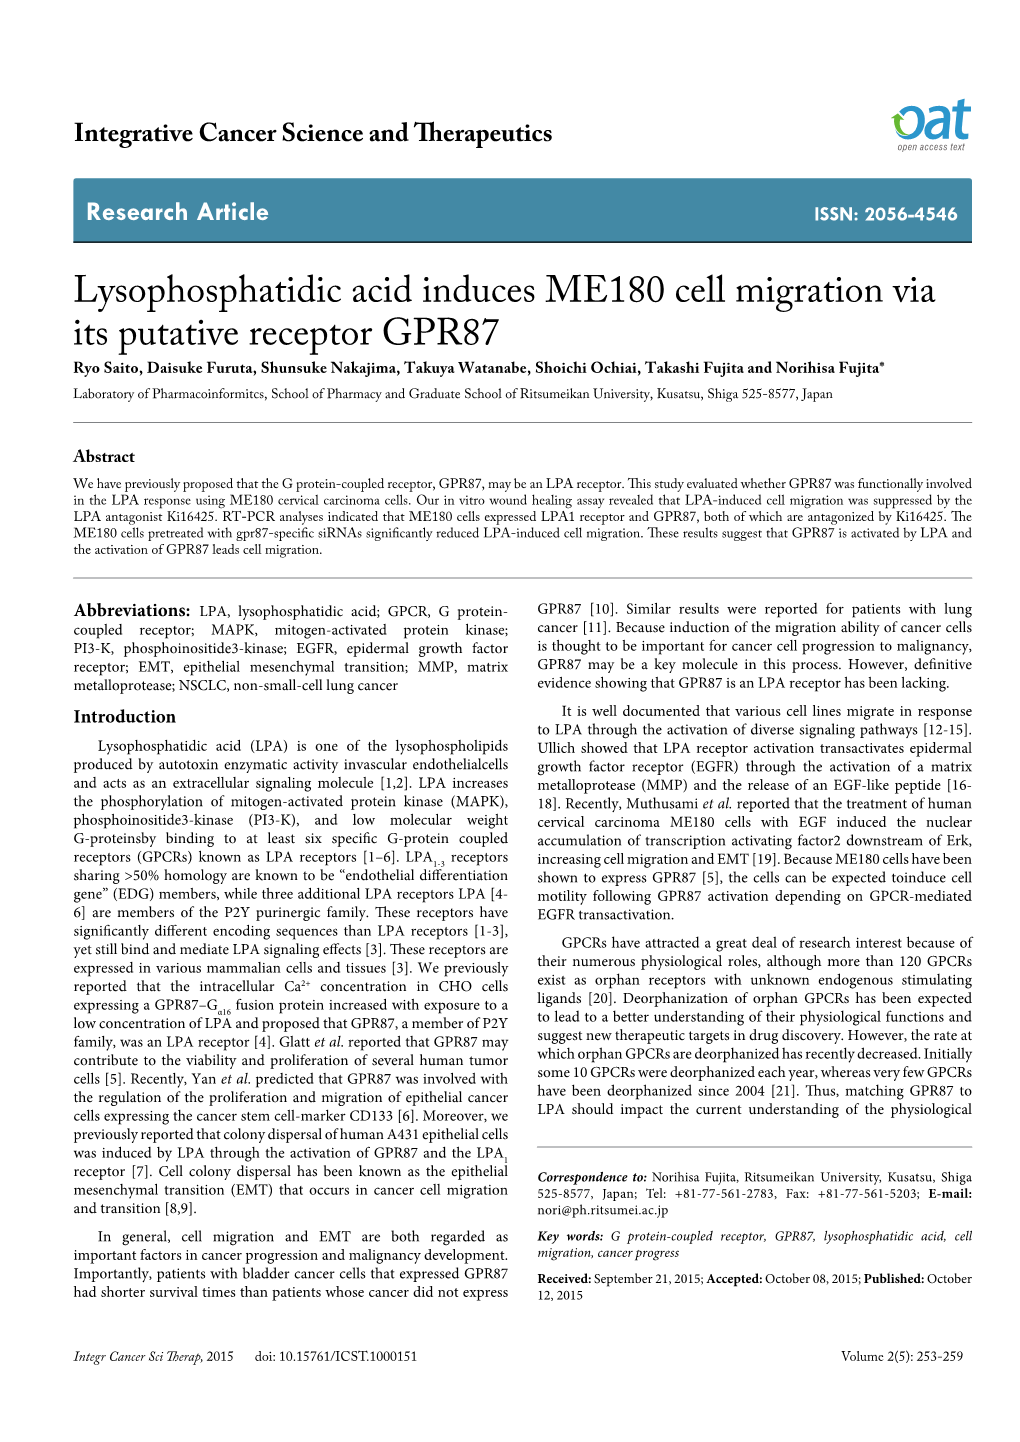 Lysophosphatidic Acid Induces ME180 Cell Migration Via Its Putative